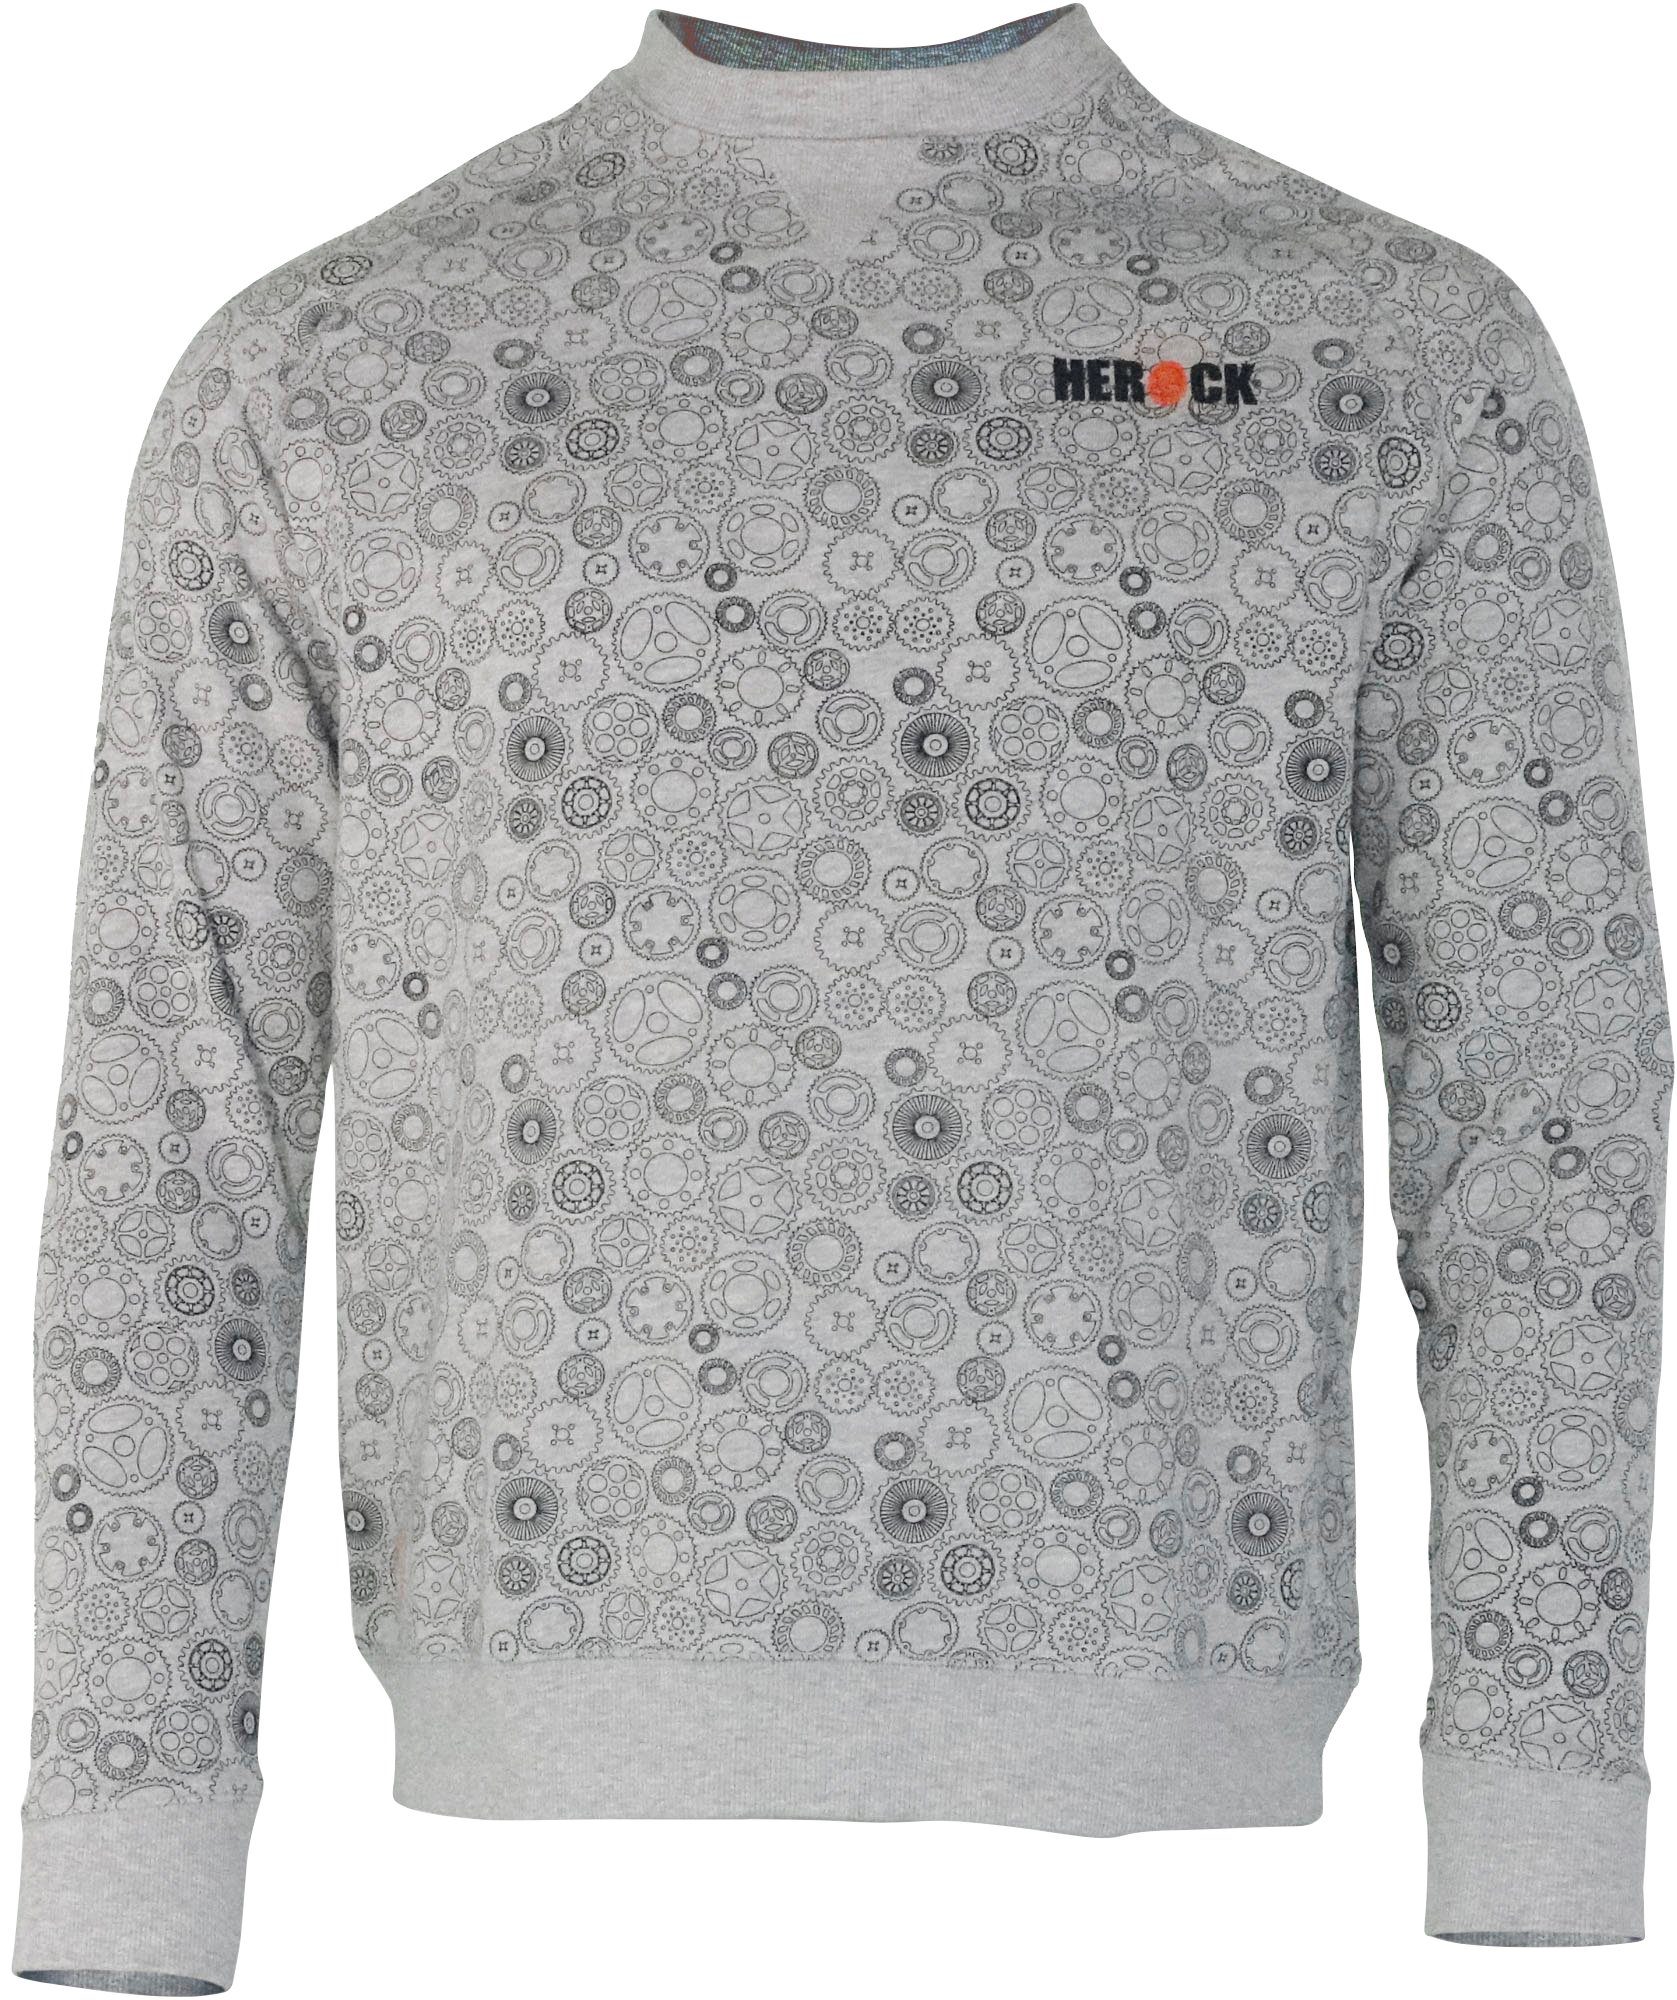 Herock Sweater Engineer Mit Zahnrad-Muster & Tragegefühl angenehmes Herock®-Aufdruck